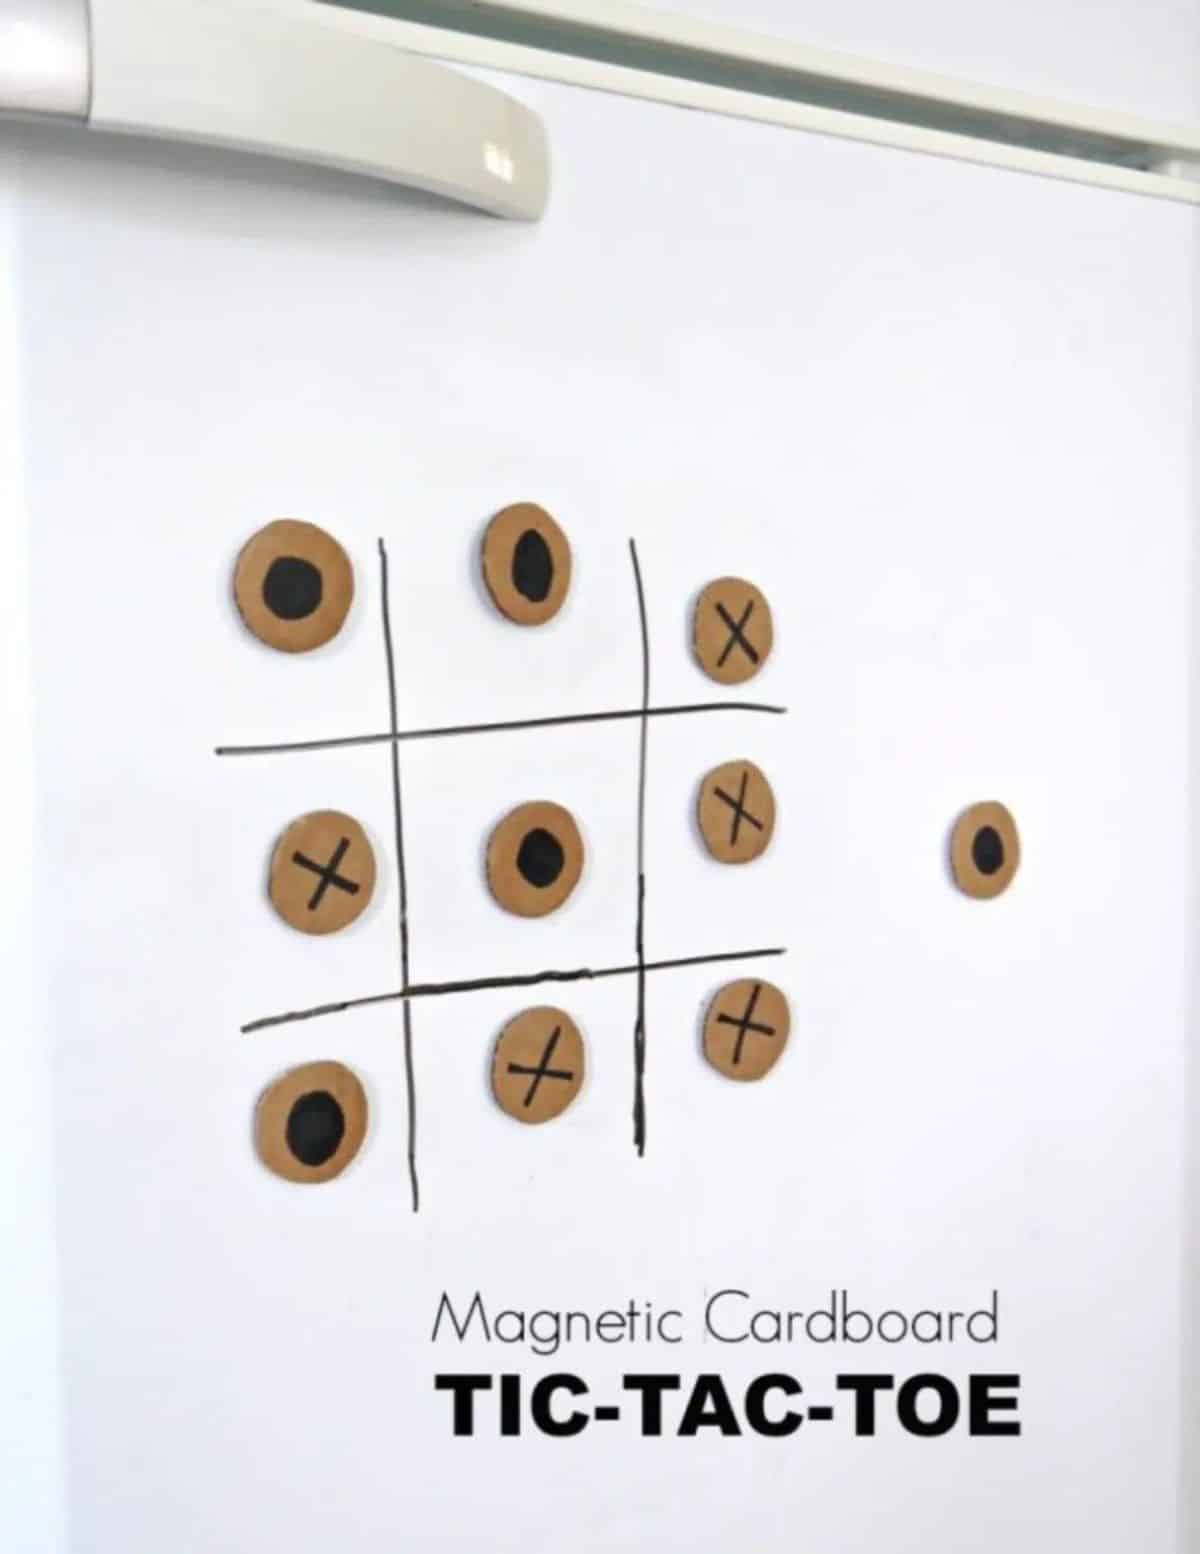 Magnetic cardboard tic-tac-toe game